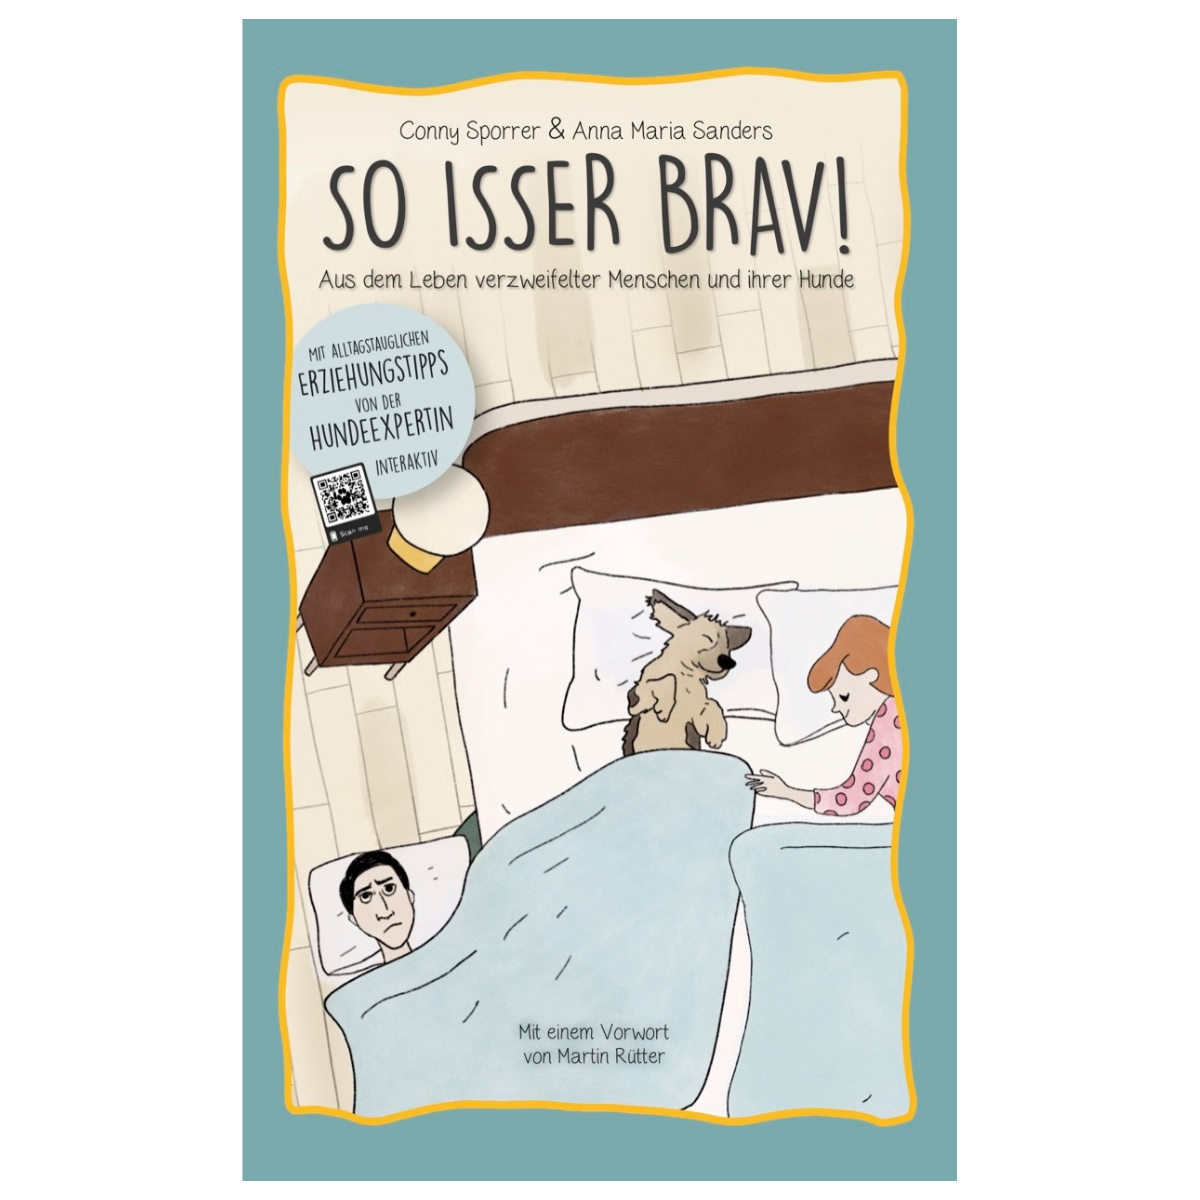 Buch - "SO ISSER BRAV!"